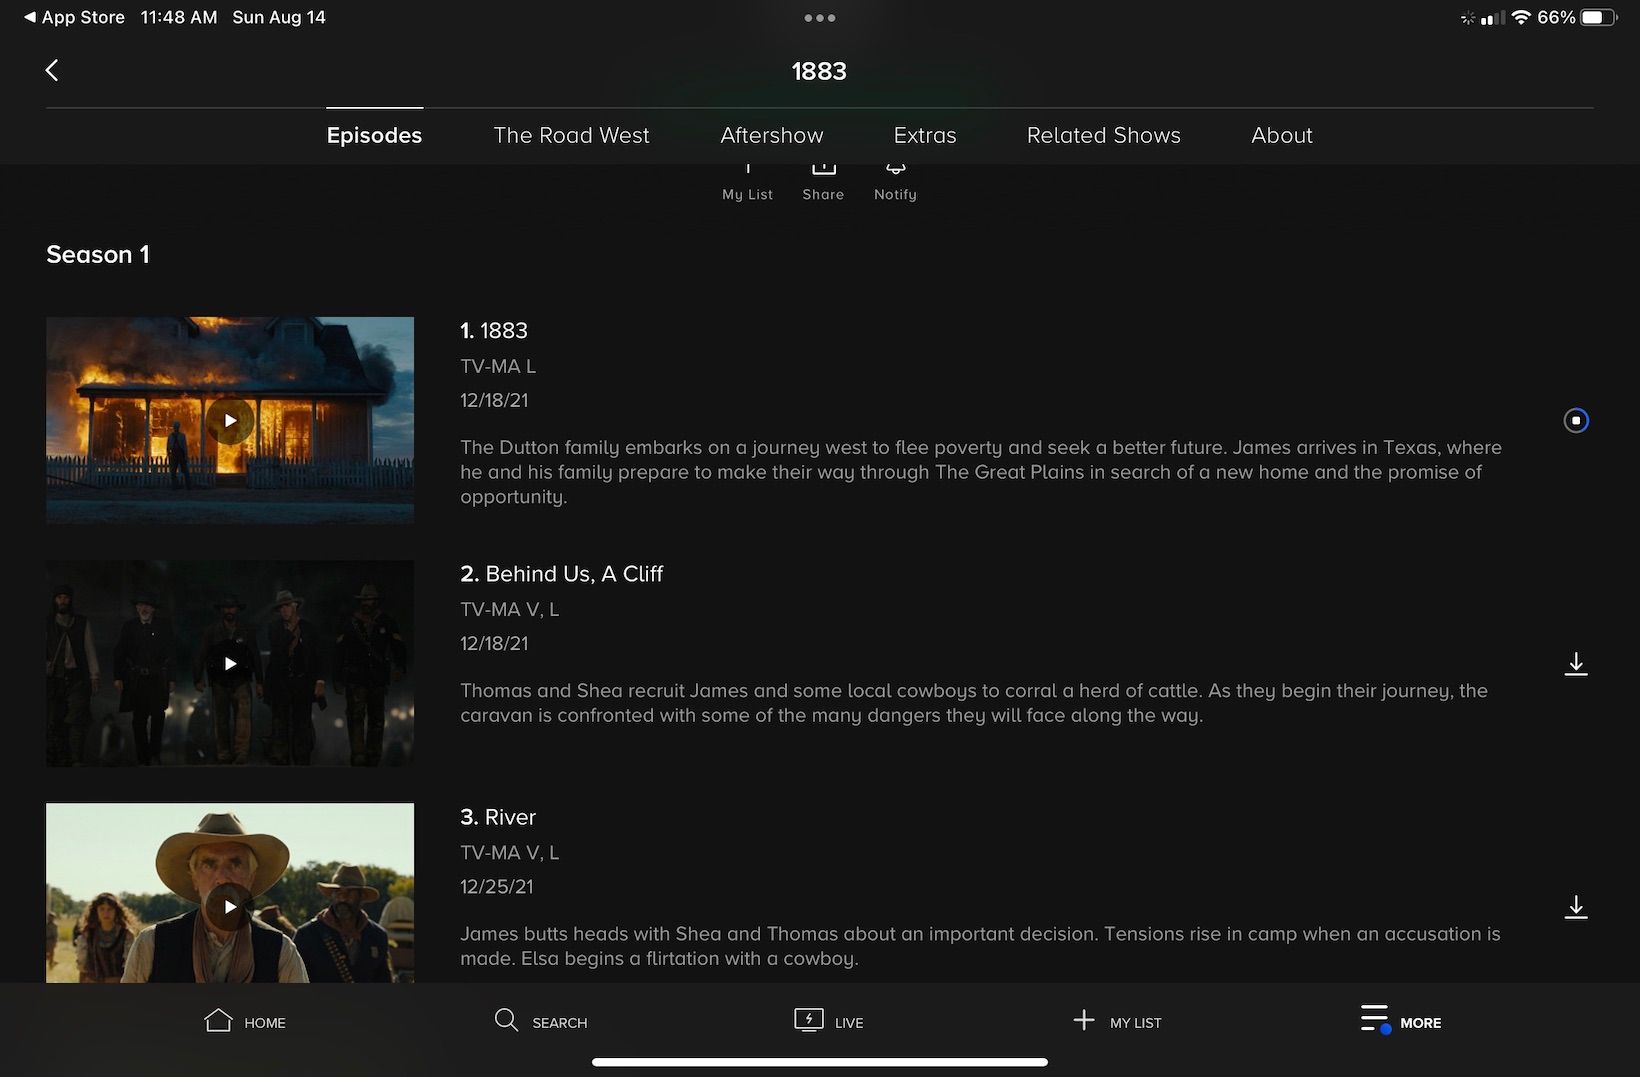 Paramount+ Download Episode Page for Tv Show 1883, Episodes 1-3. Contains Episode descriptions, thumbnails, and download arrows. 